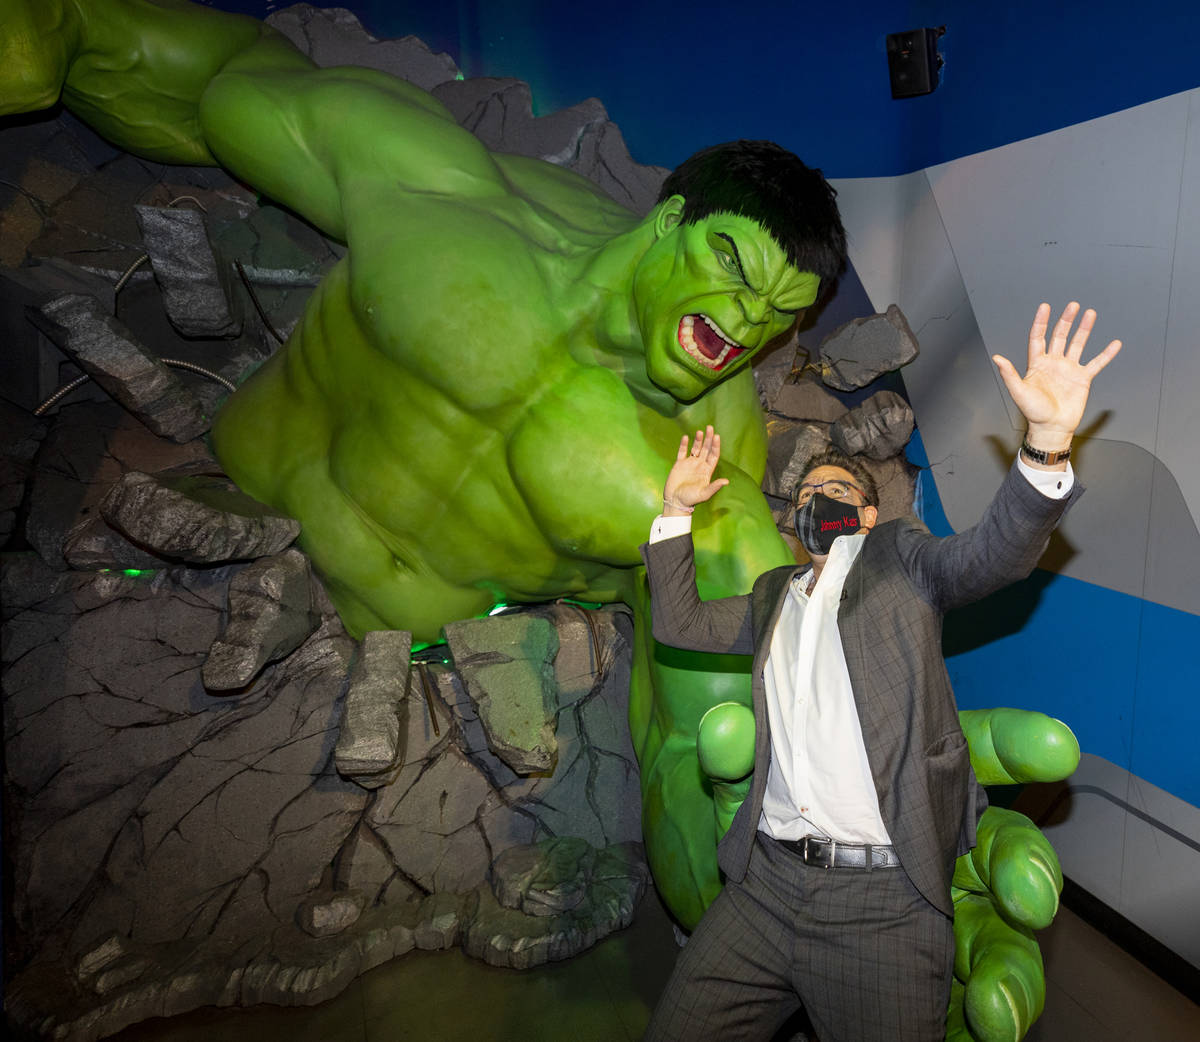 John Katsilometes poses with the Hulk during a tour of Madame Tussauds Las Vegas wax museum loc ...